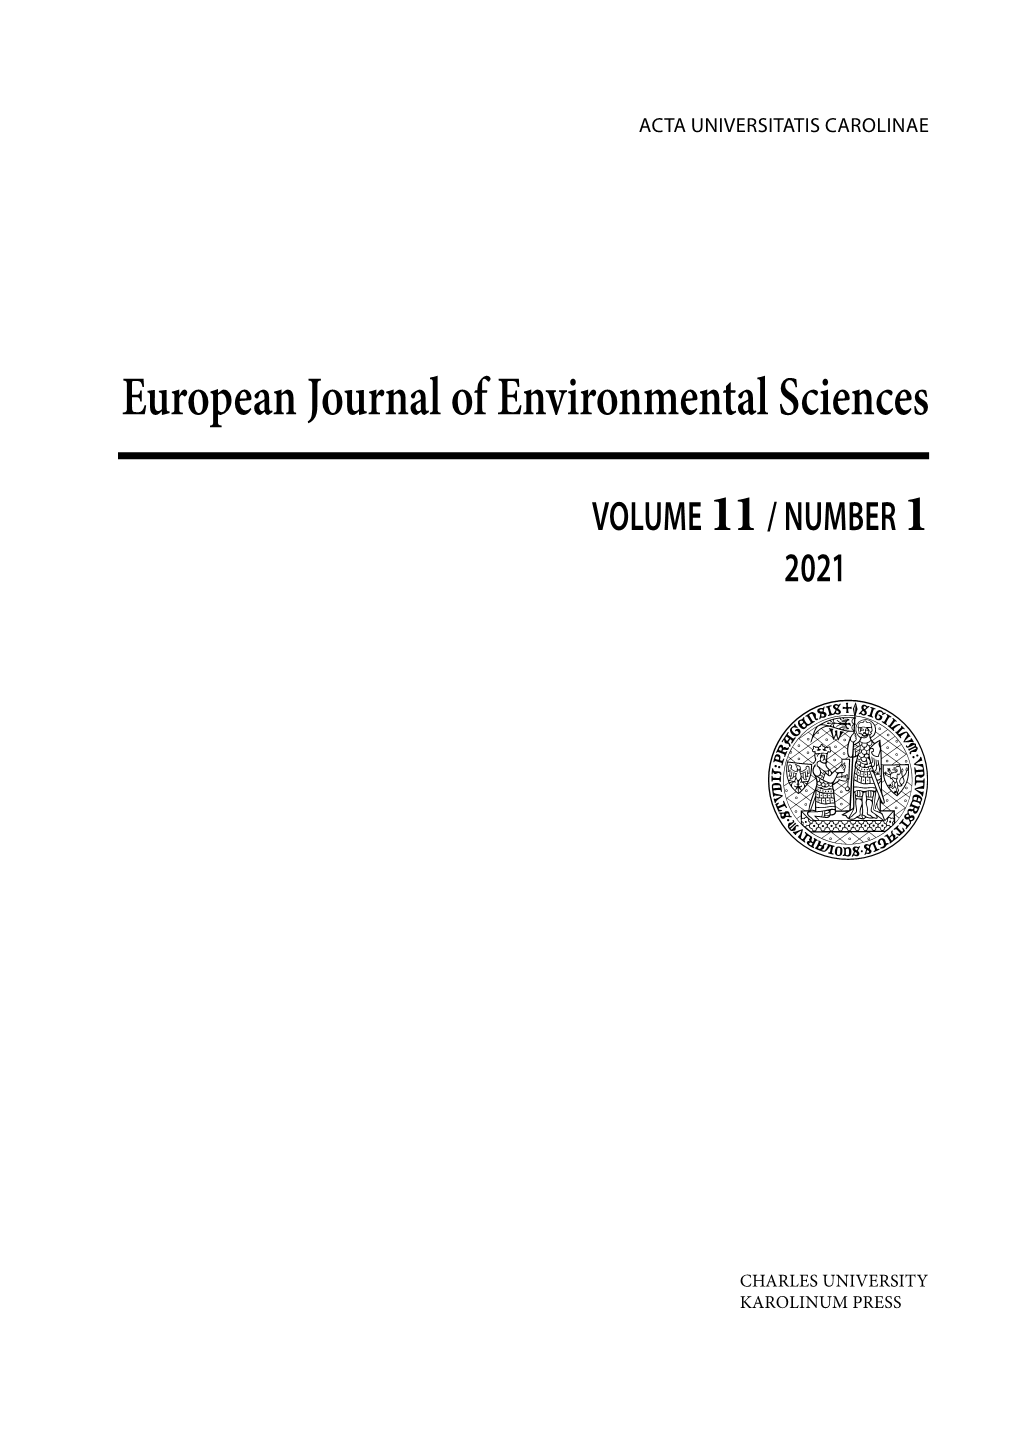 European Journal of Environmental Sciences